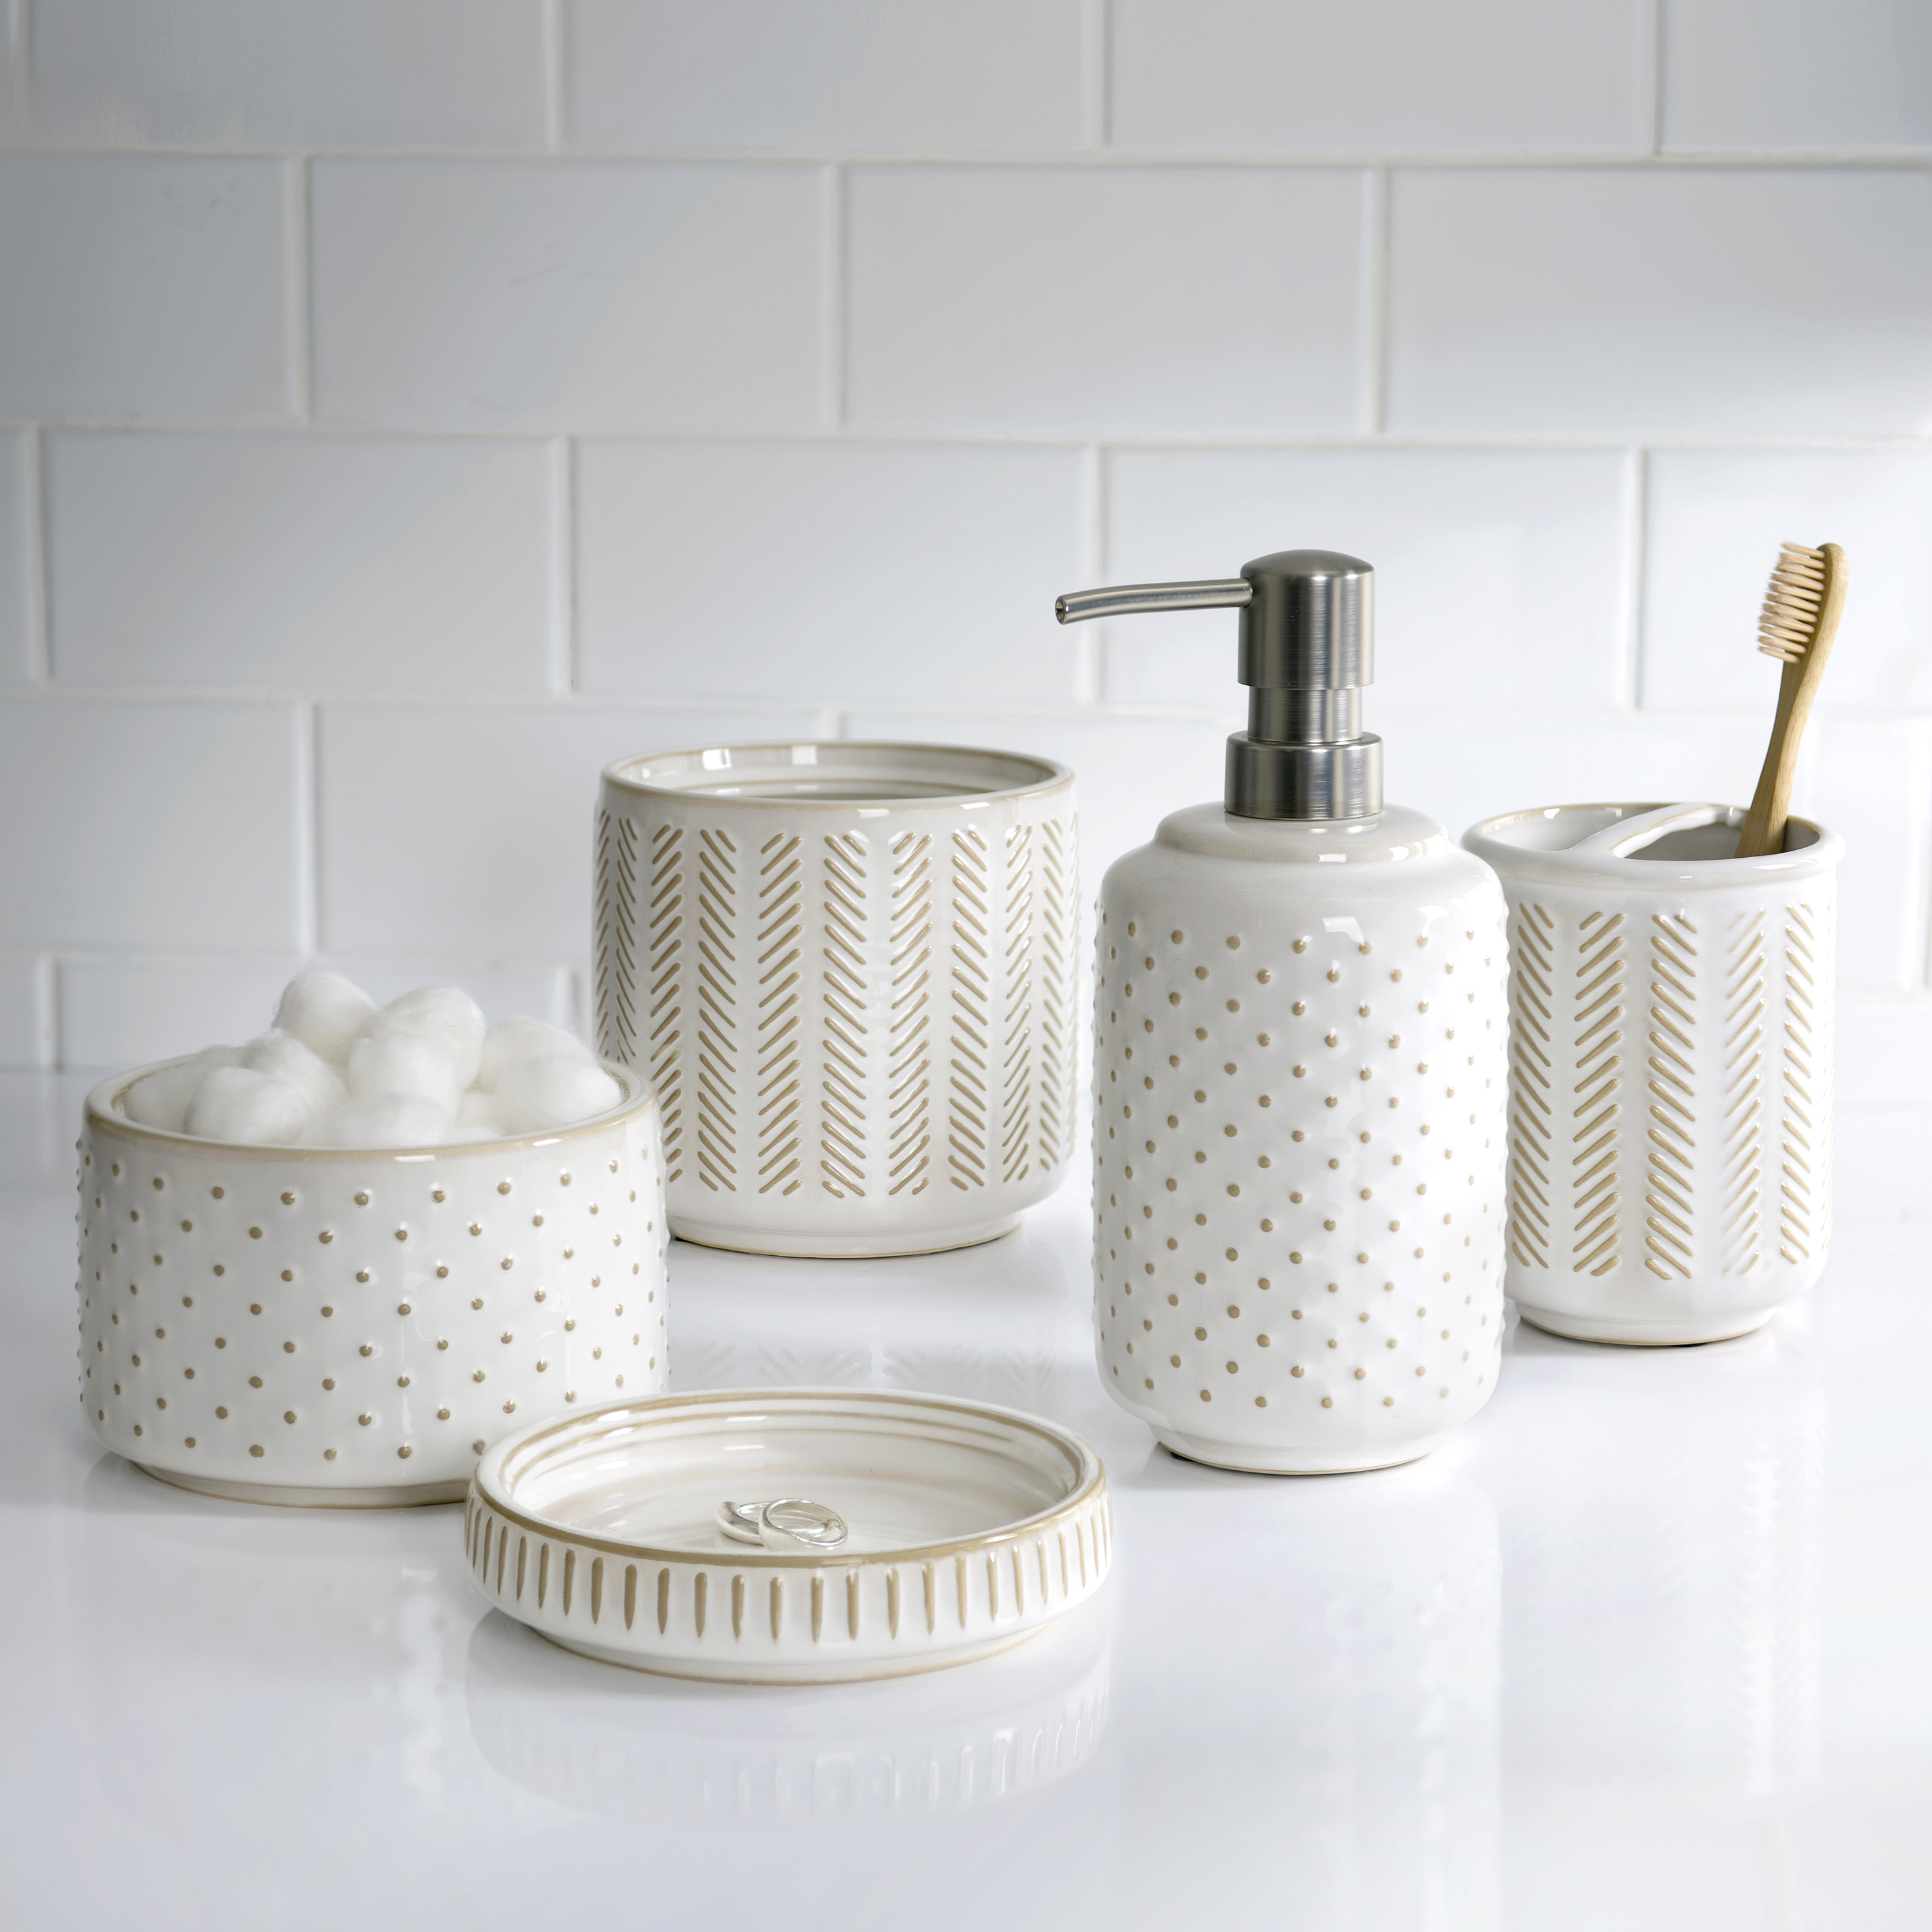 Better Homes & Gardens Reactive Glazed Textured Ceramic Toothbrush Holder in Creamy White - image 6 of 6